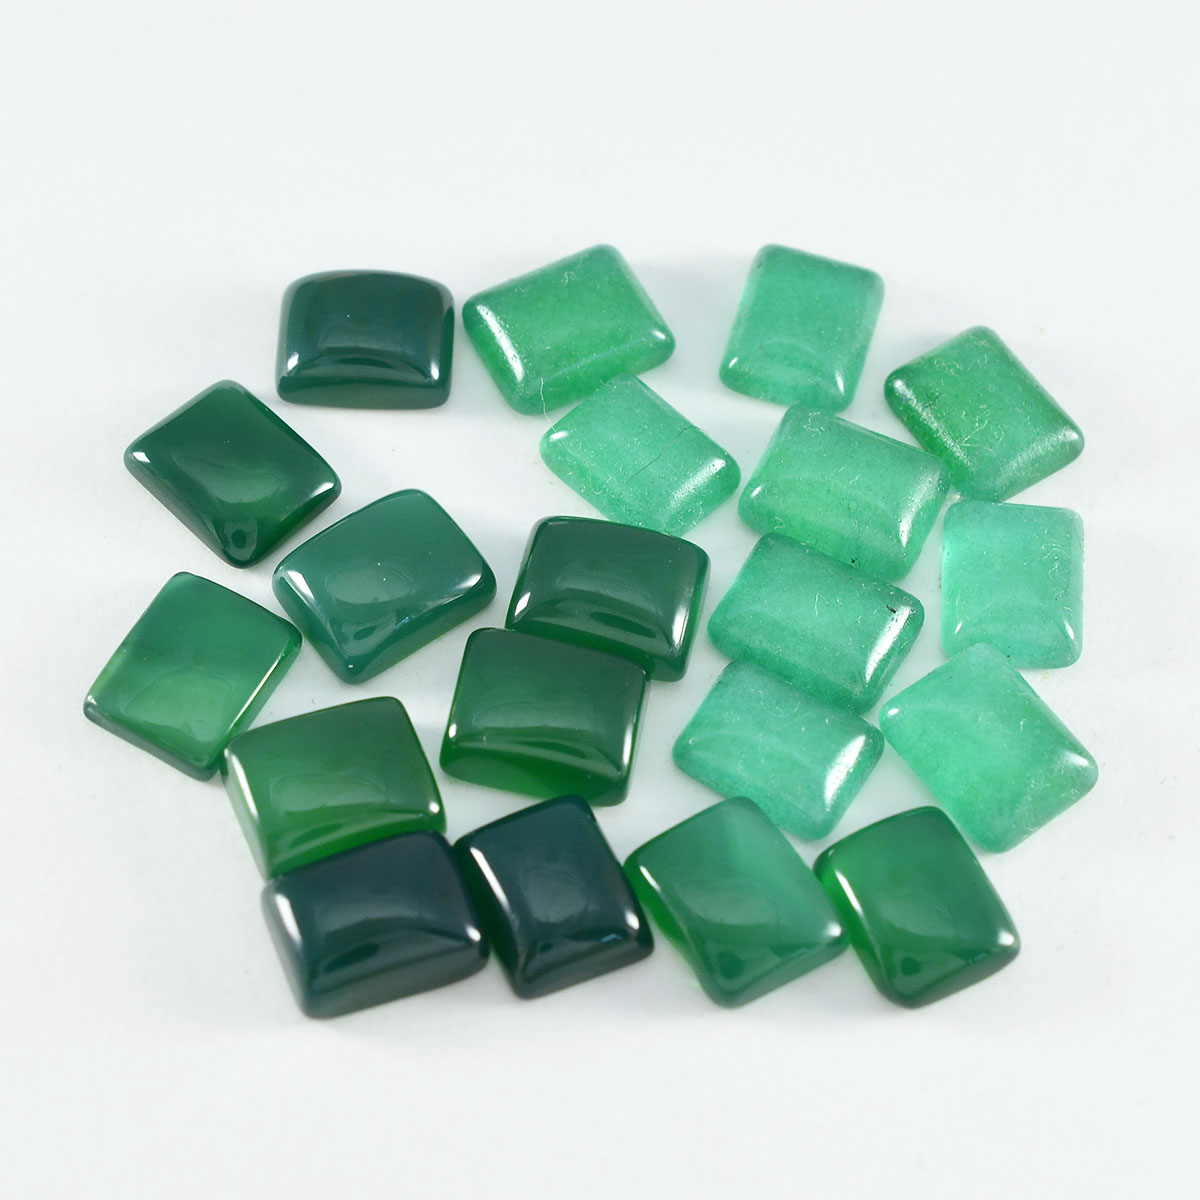 Riyogems 1PC groene onyx cabochon 6x8 mm achthoekige vorm mooie kwaliteit losse edelstenen